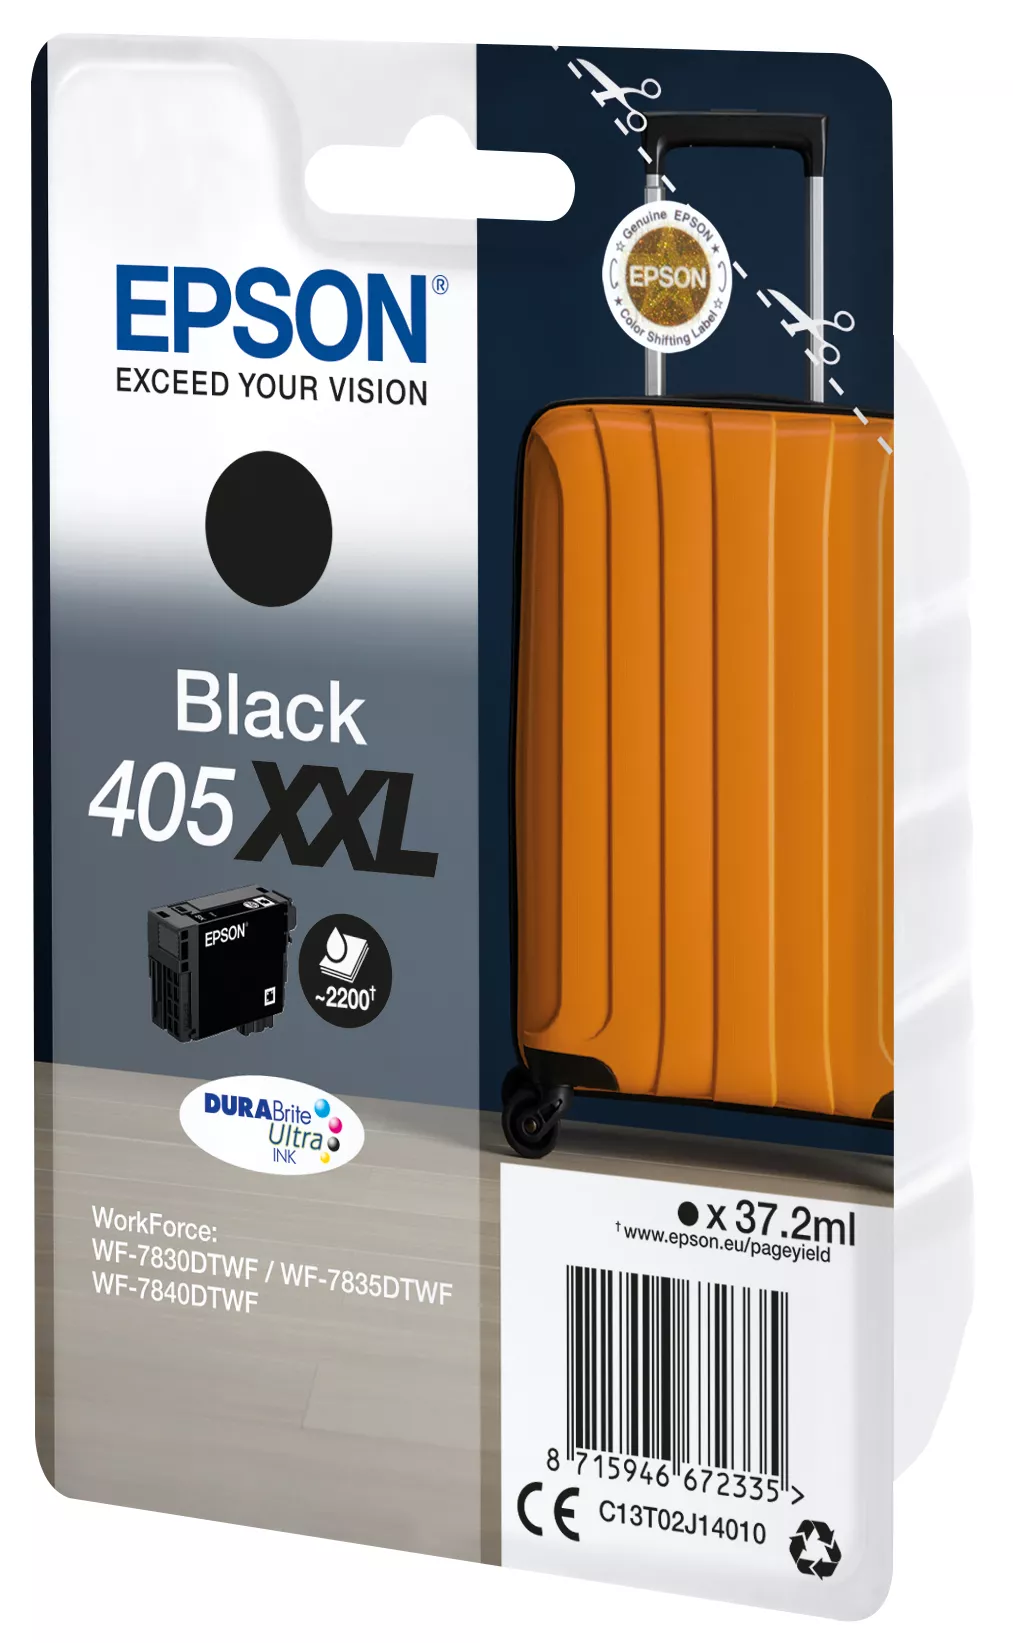 Vente EPSON Singlepack Black 405XXL DURABrite Ultra Ink Epson au meilleur prix - visuel 2